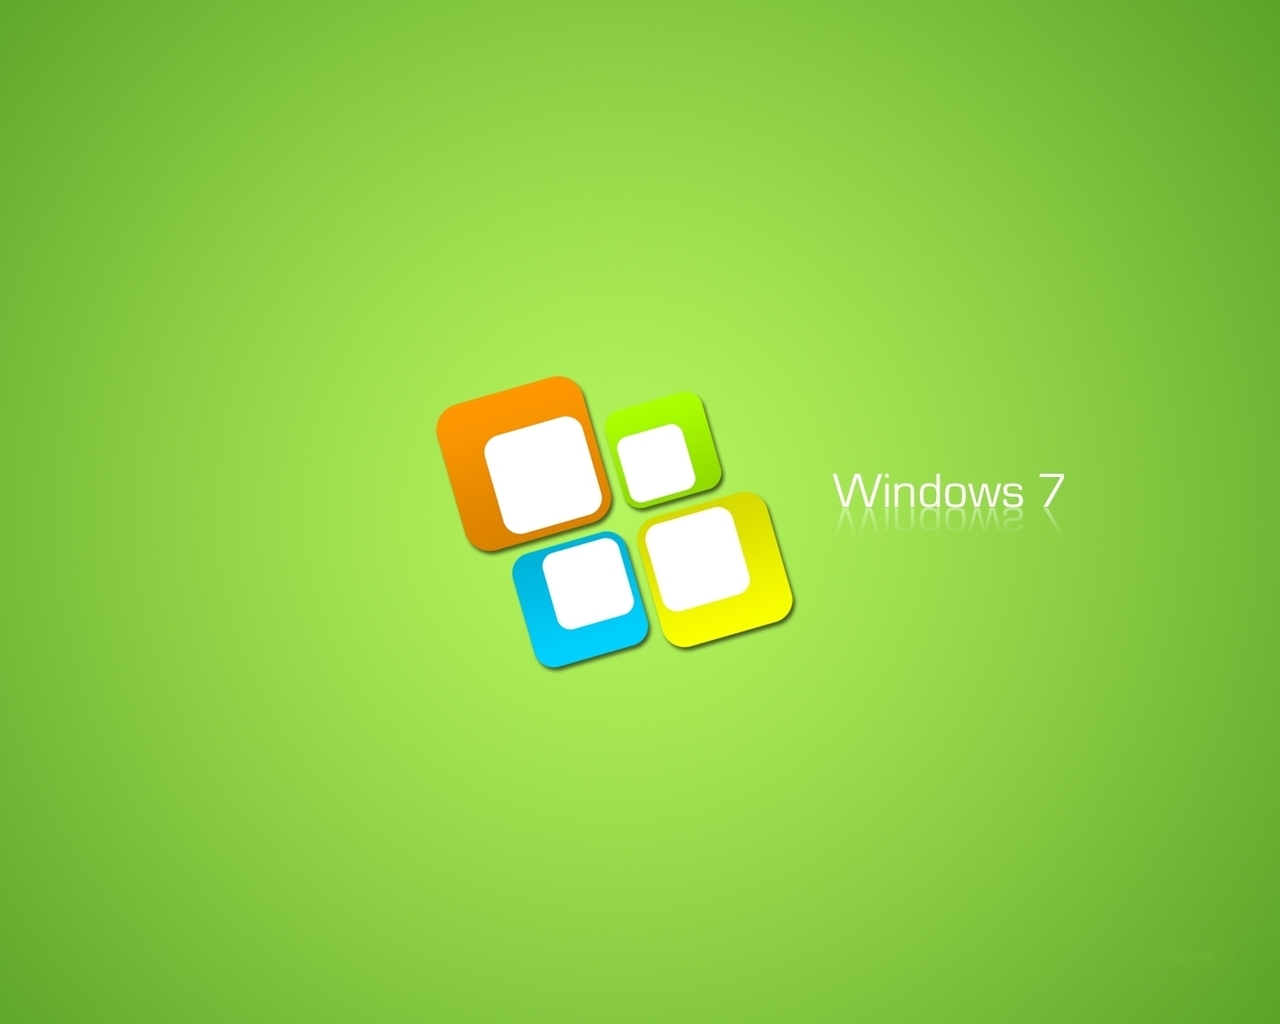 Windows Seven